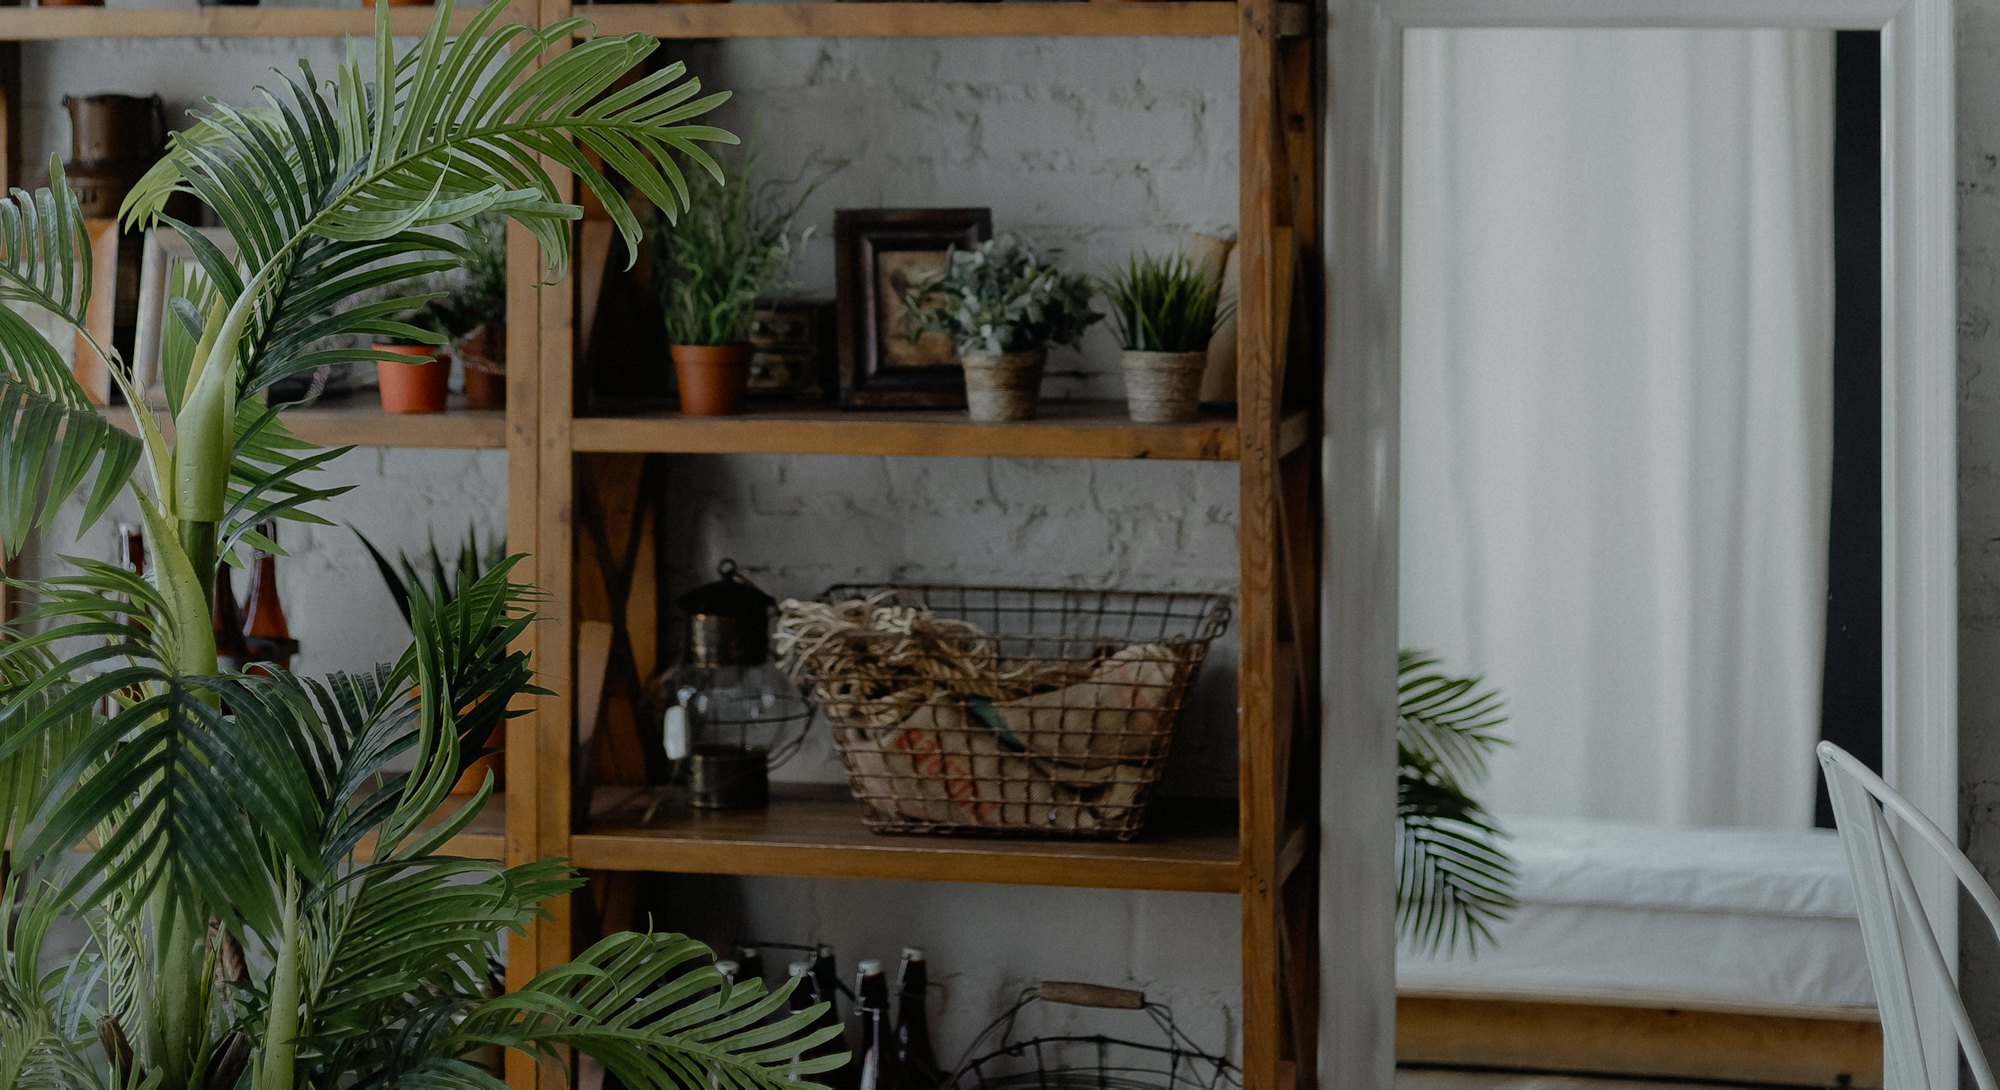 Plants in a pot,  frames, bottles on the shelf, mirror in the bedroom